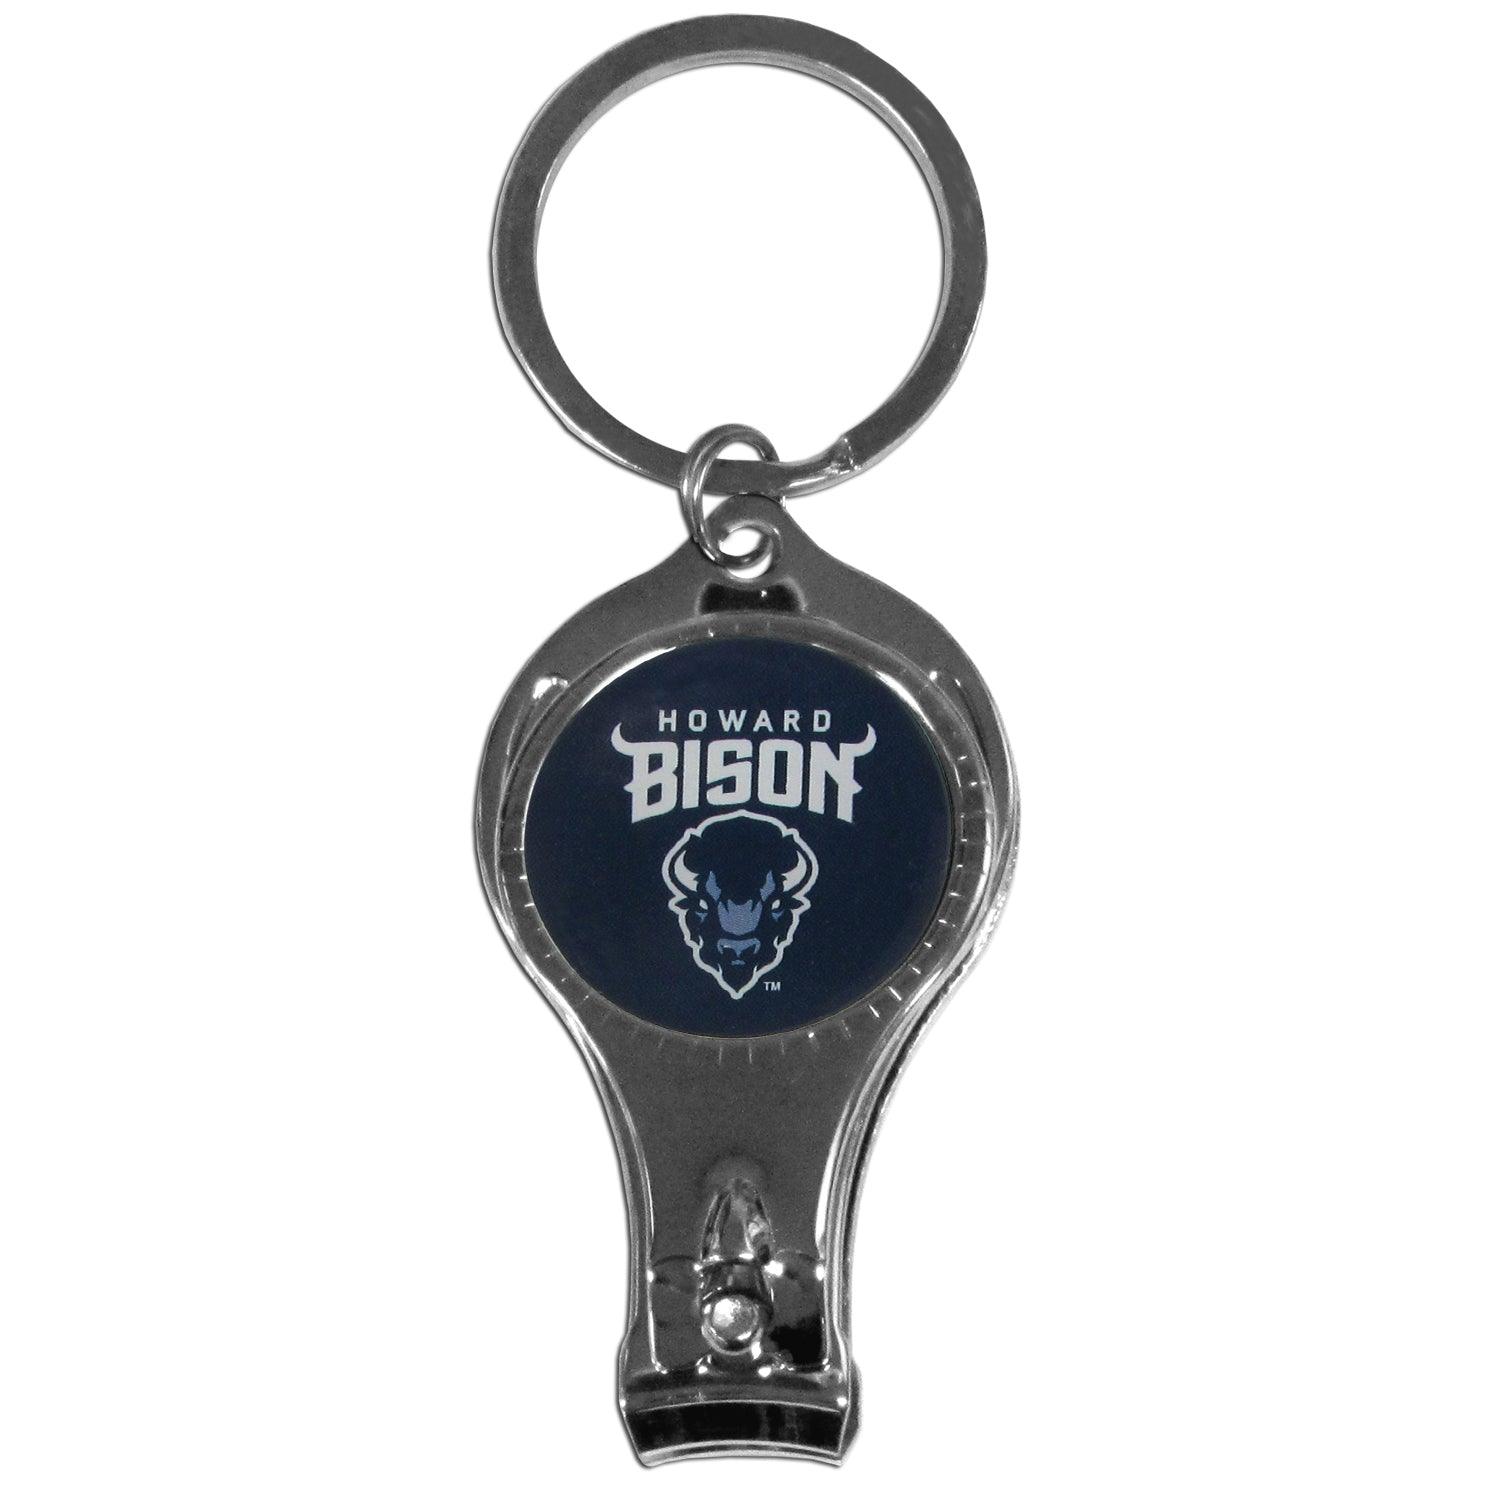 NHL St. Louis Blues Metal Keychain - Beverage Bottle Opener With Key R